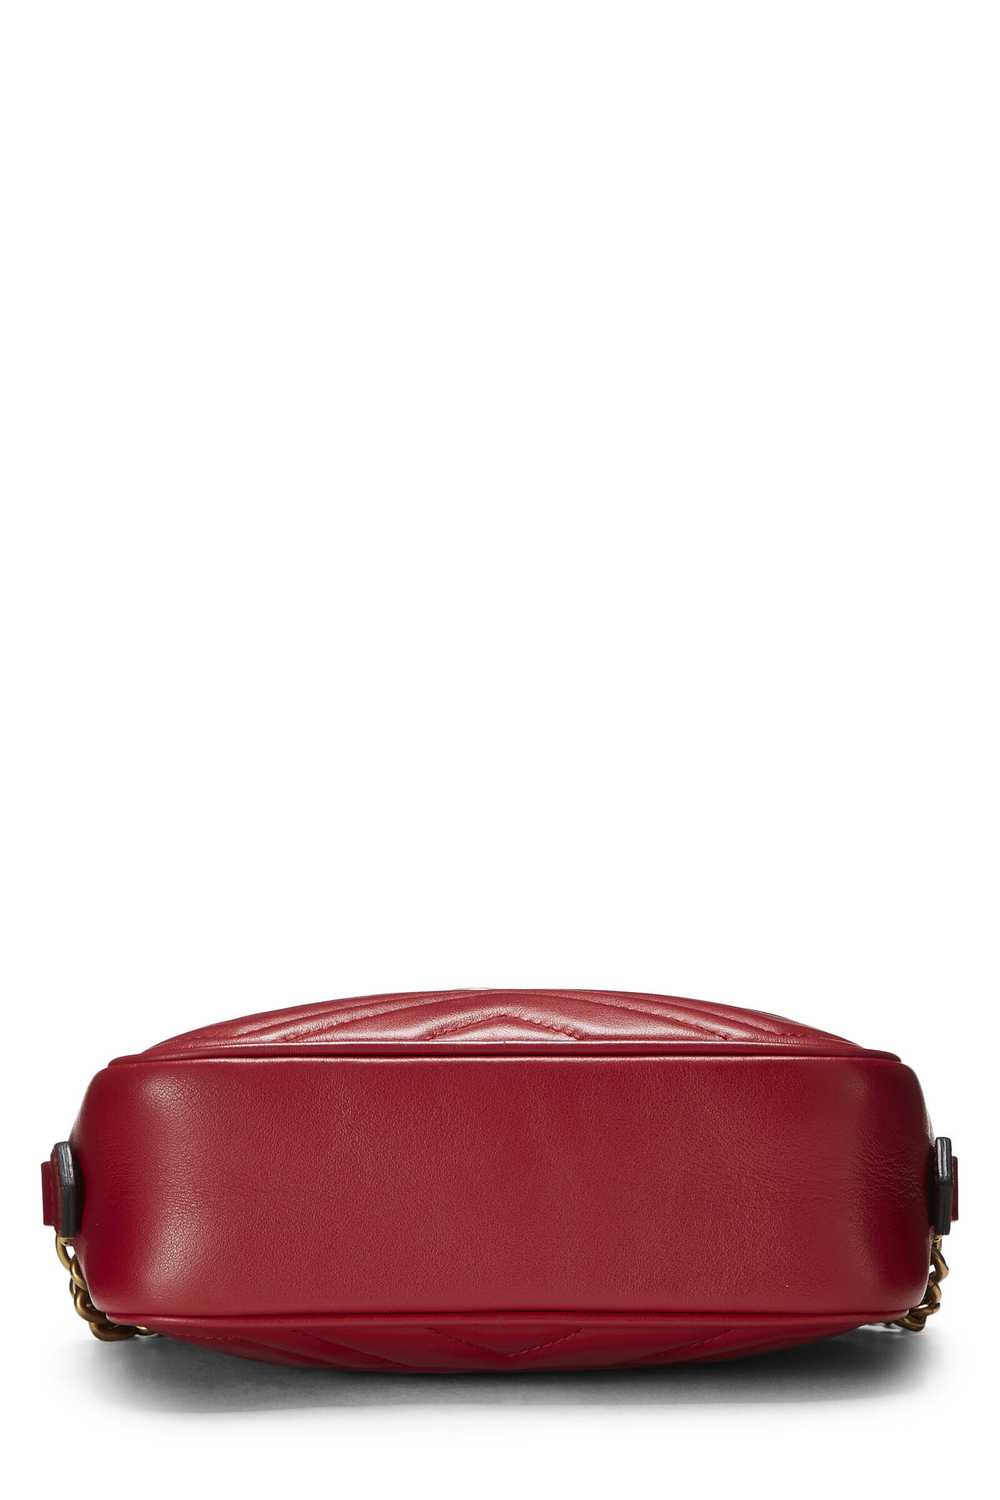 Red Leather GG Marmont Shoulder Bag Mini - image 5